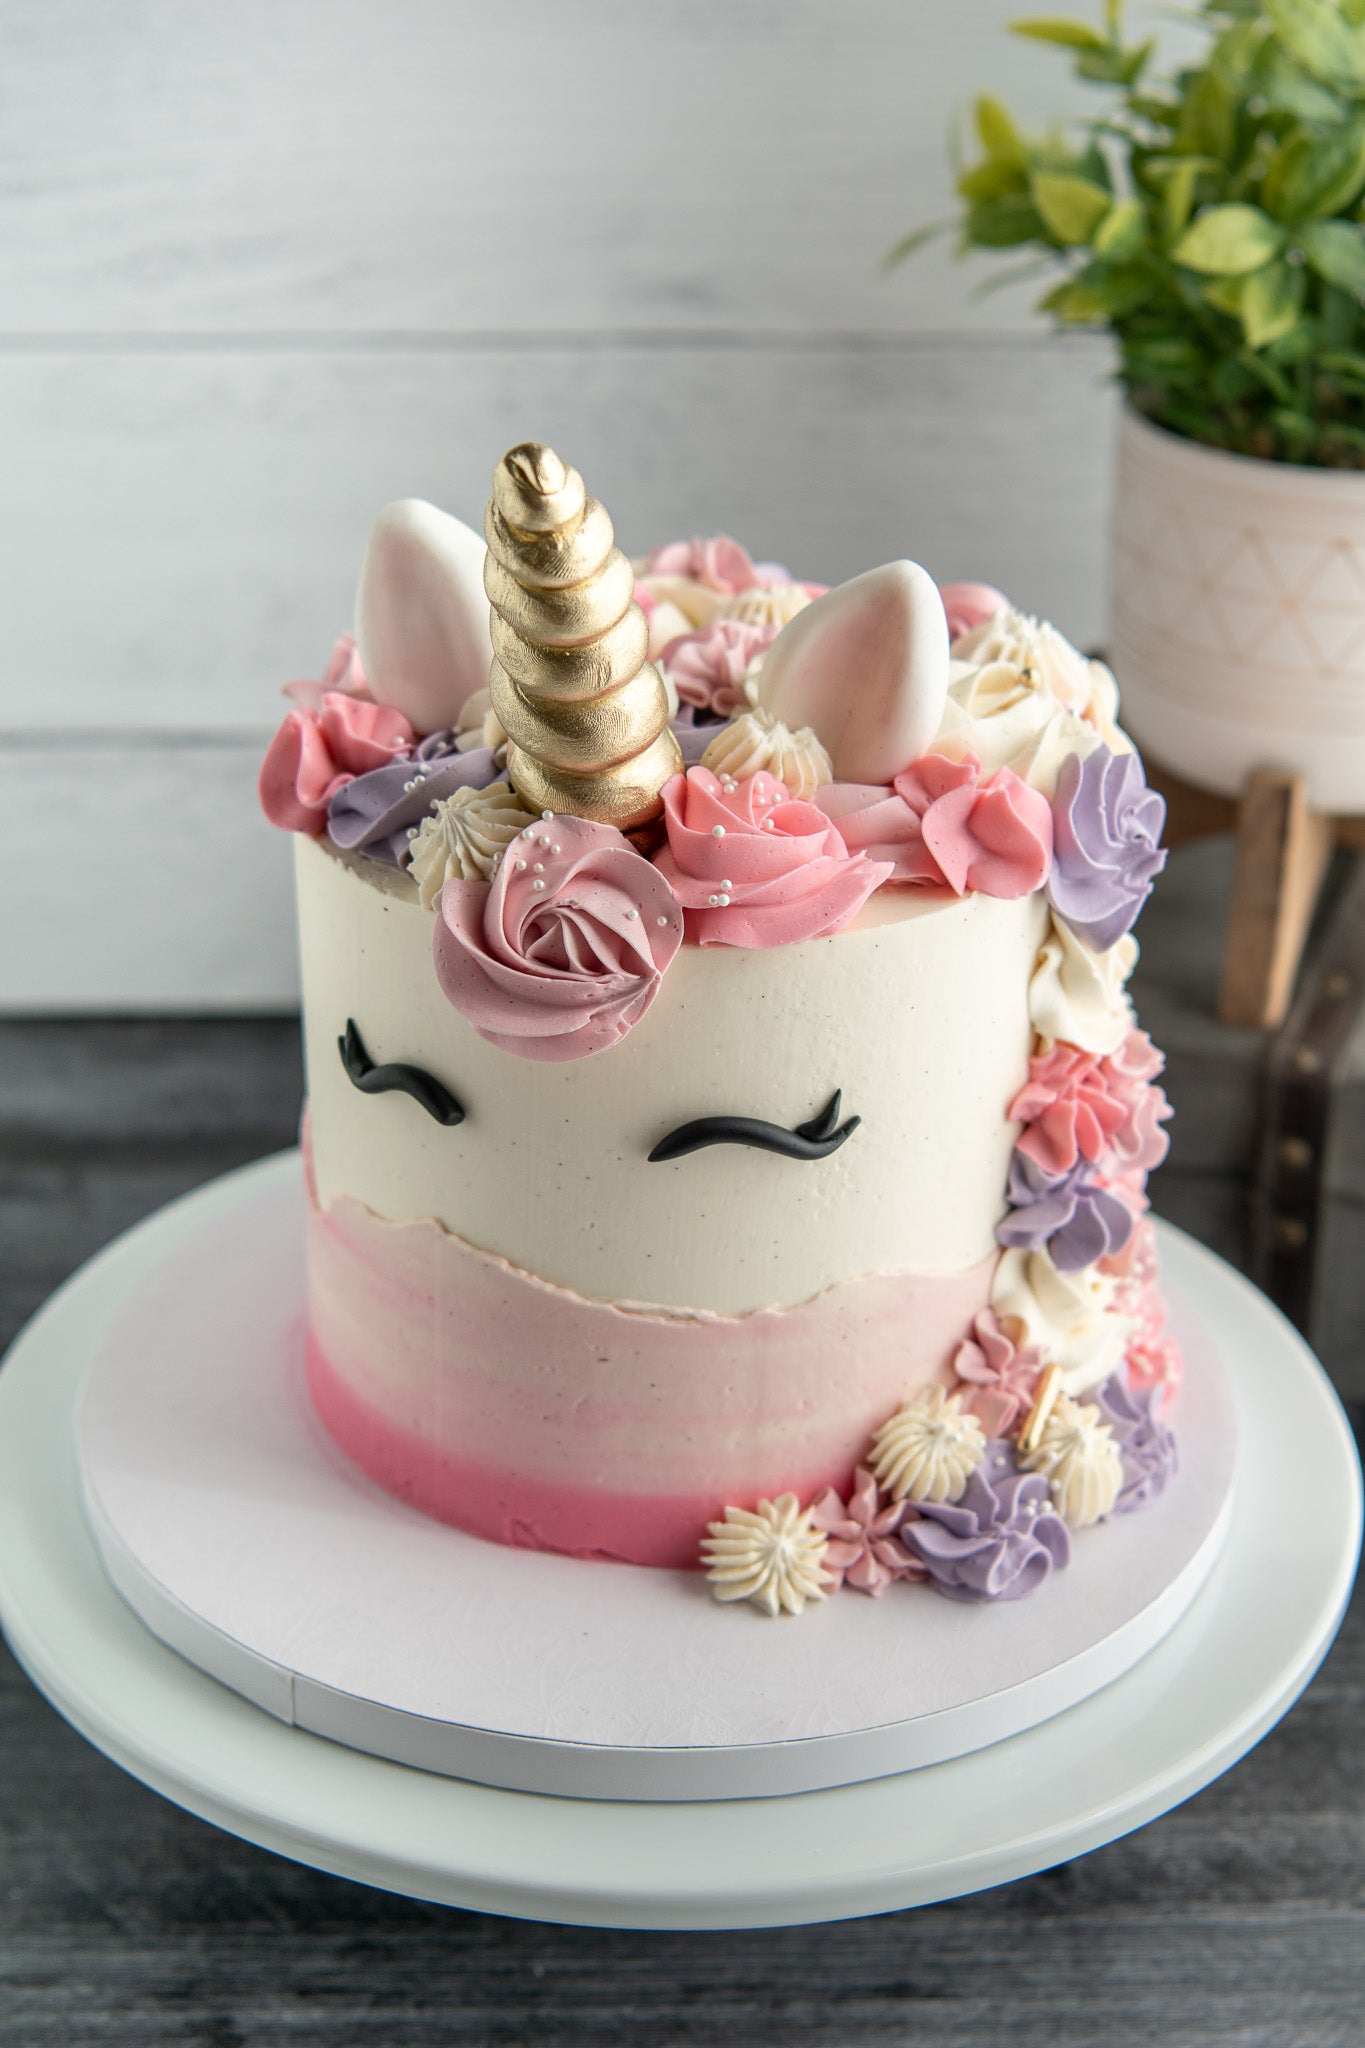 Buy/Send Unicorn Photo Cake Online @ Rs. 1525 - SendBestGift